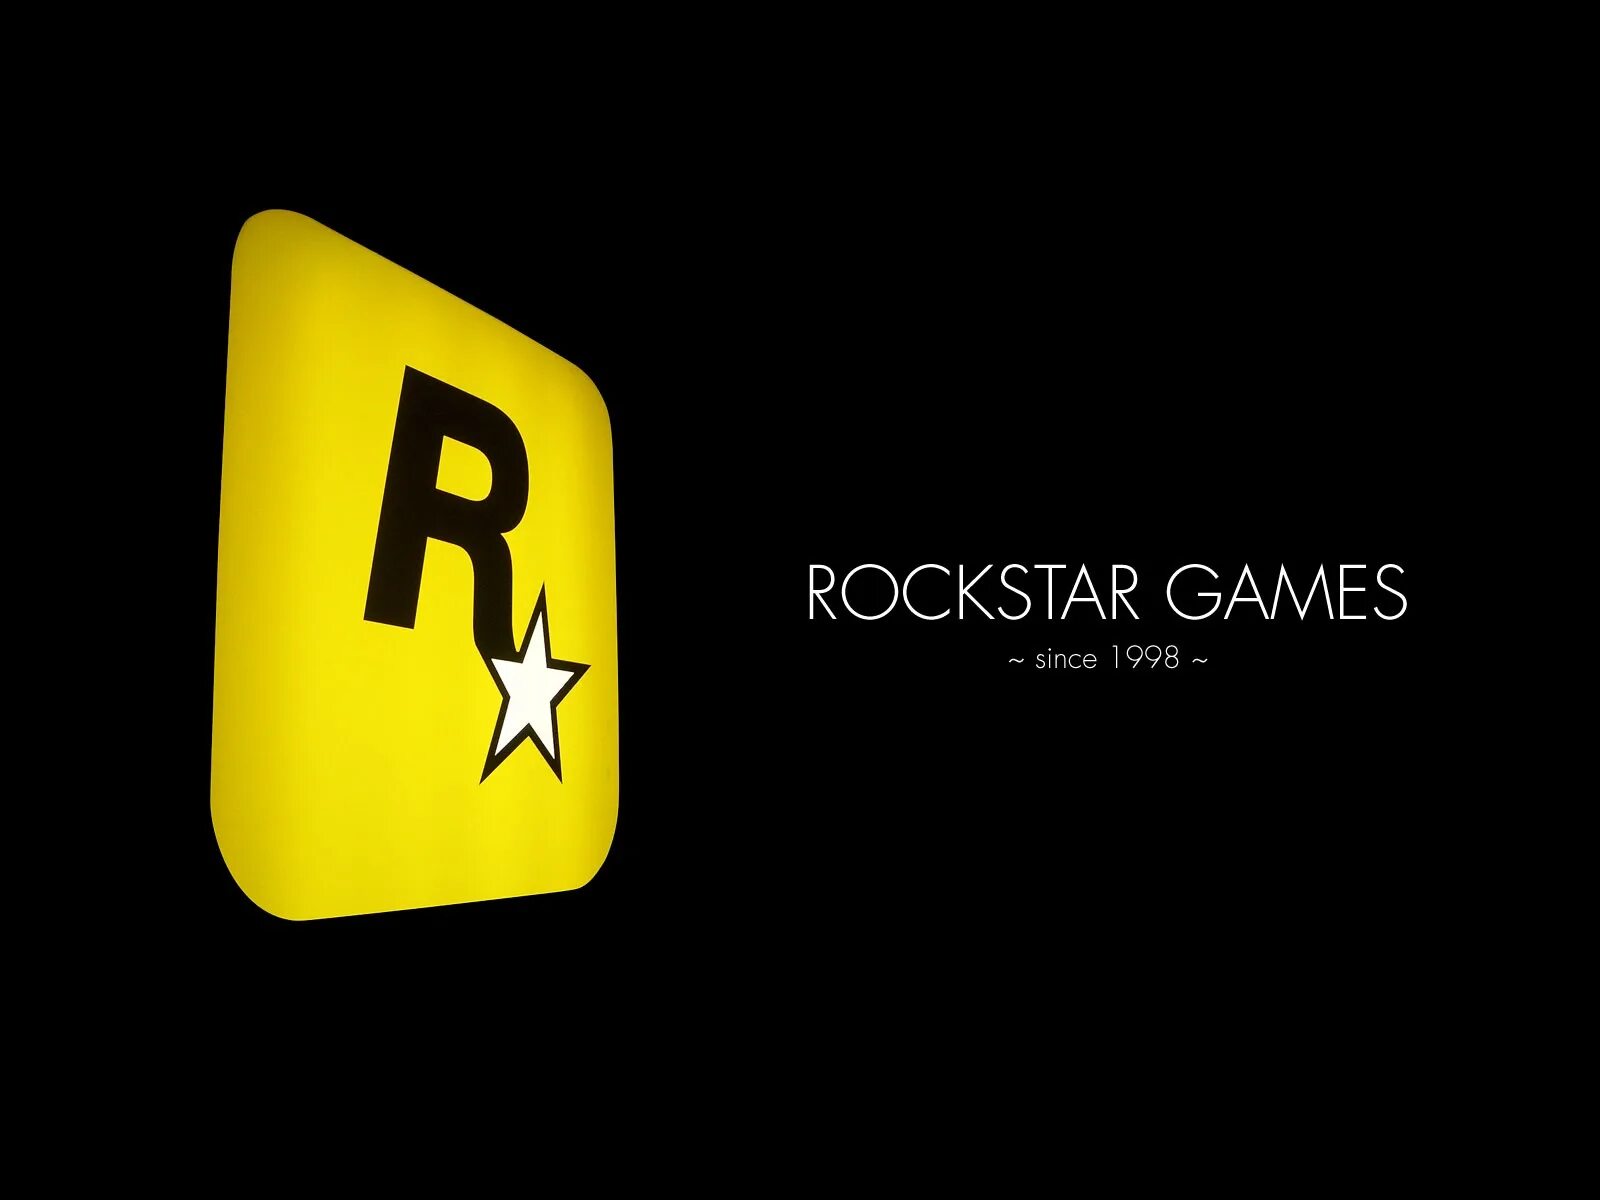 Rockstar games. Логотип рокстар. Rooster game. Игры Rockstar. Сервис rockstar games